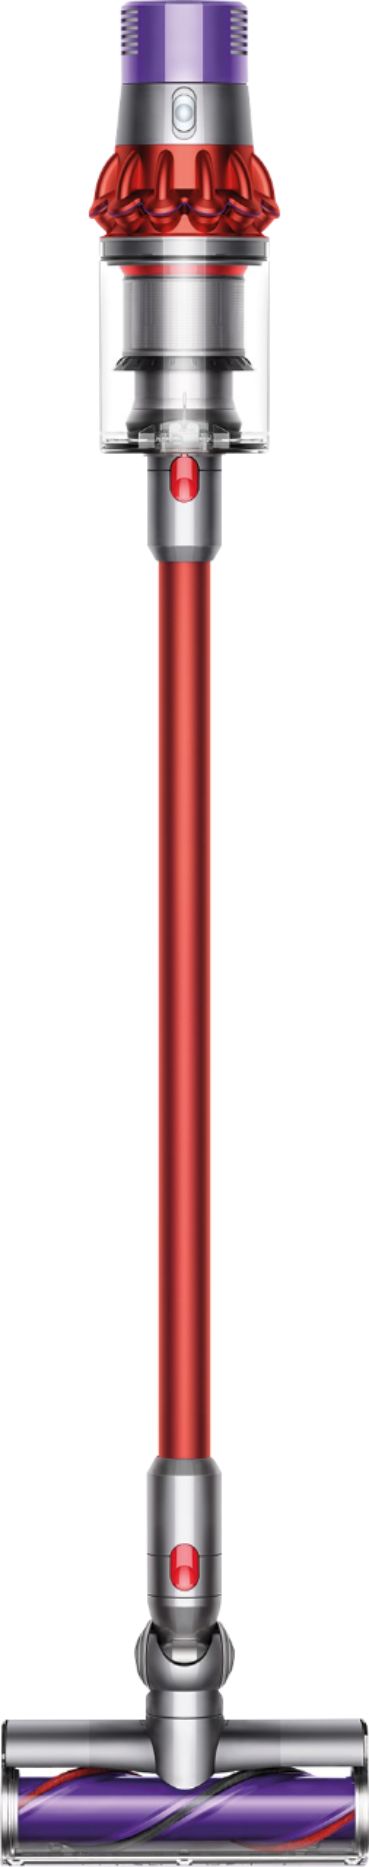 Best Buy: Dyson Cyclone V10 Motorhead Cord-Free Stick Vacuum Red